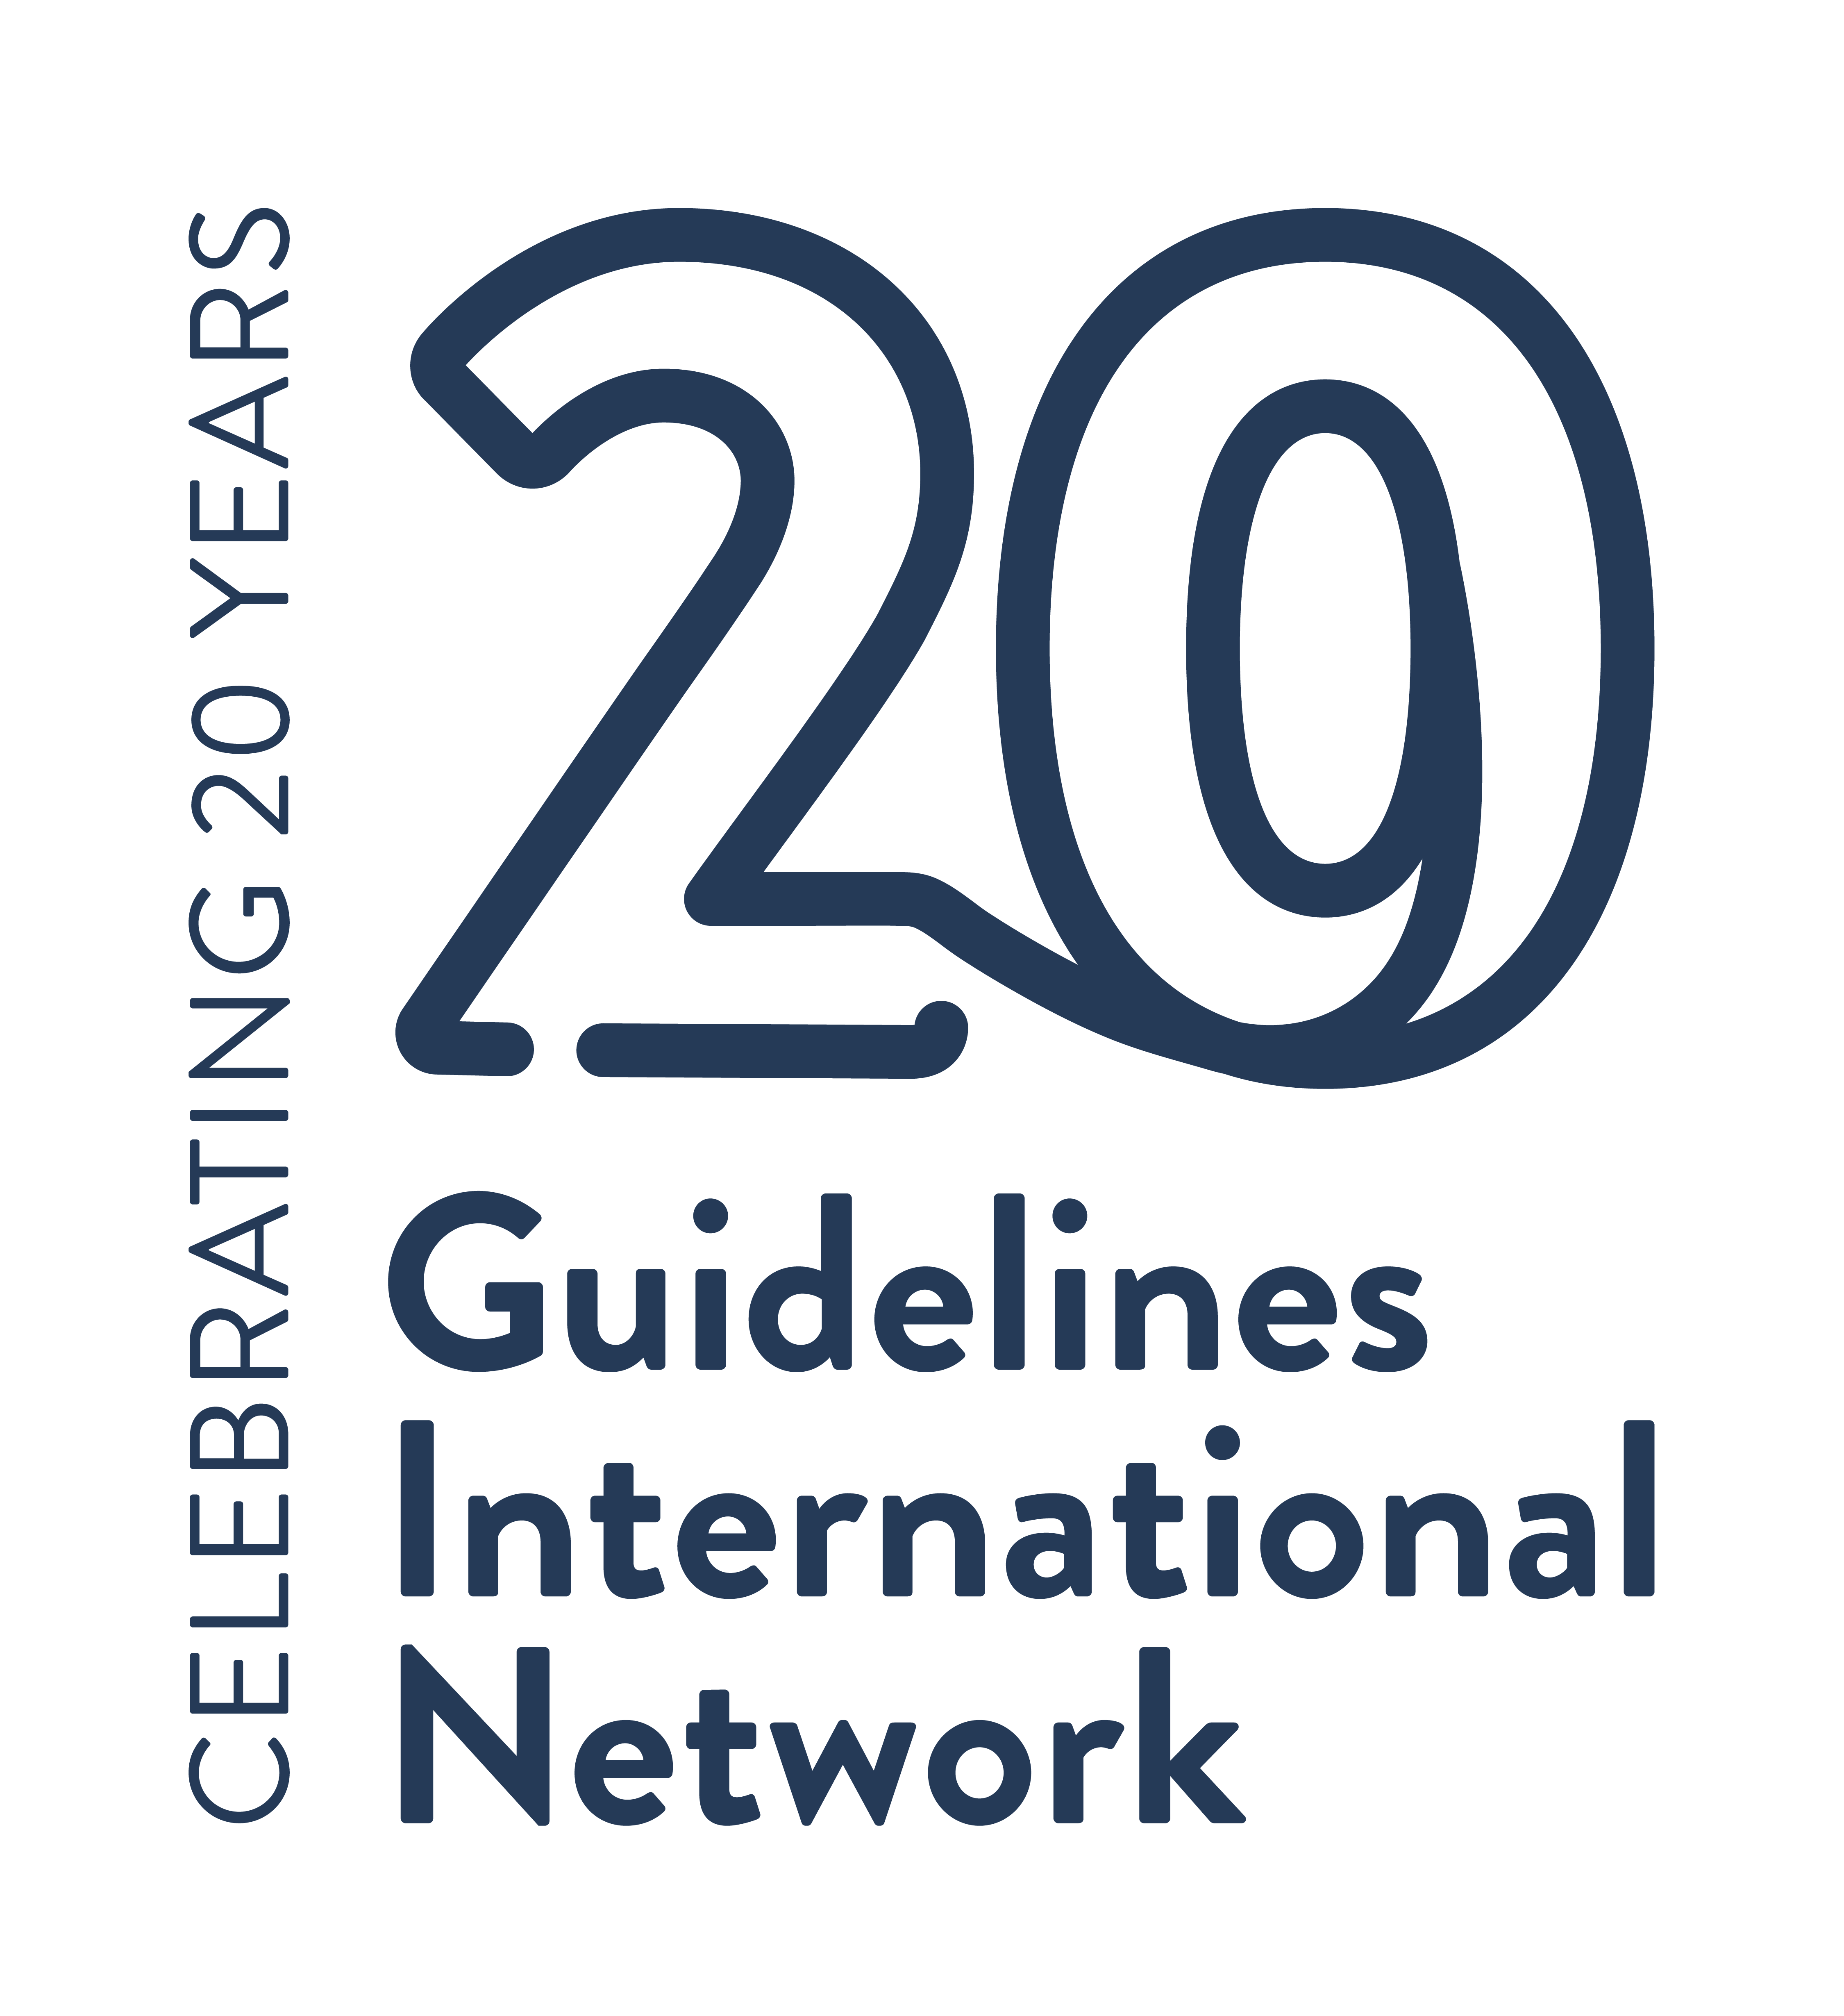 Guidelines International Network